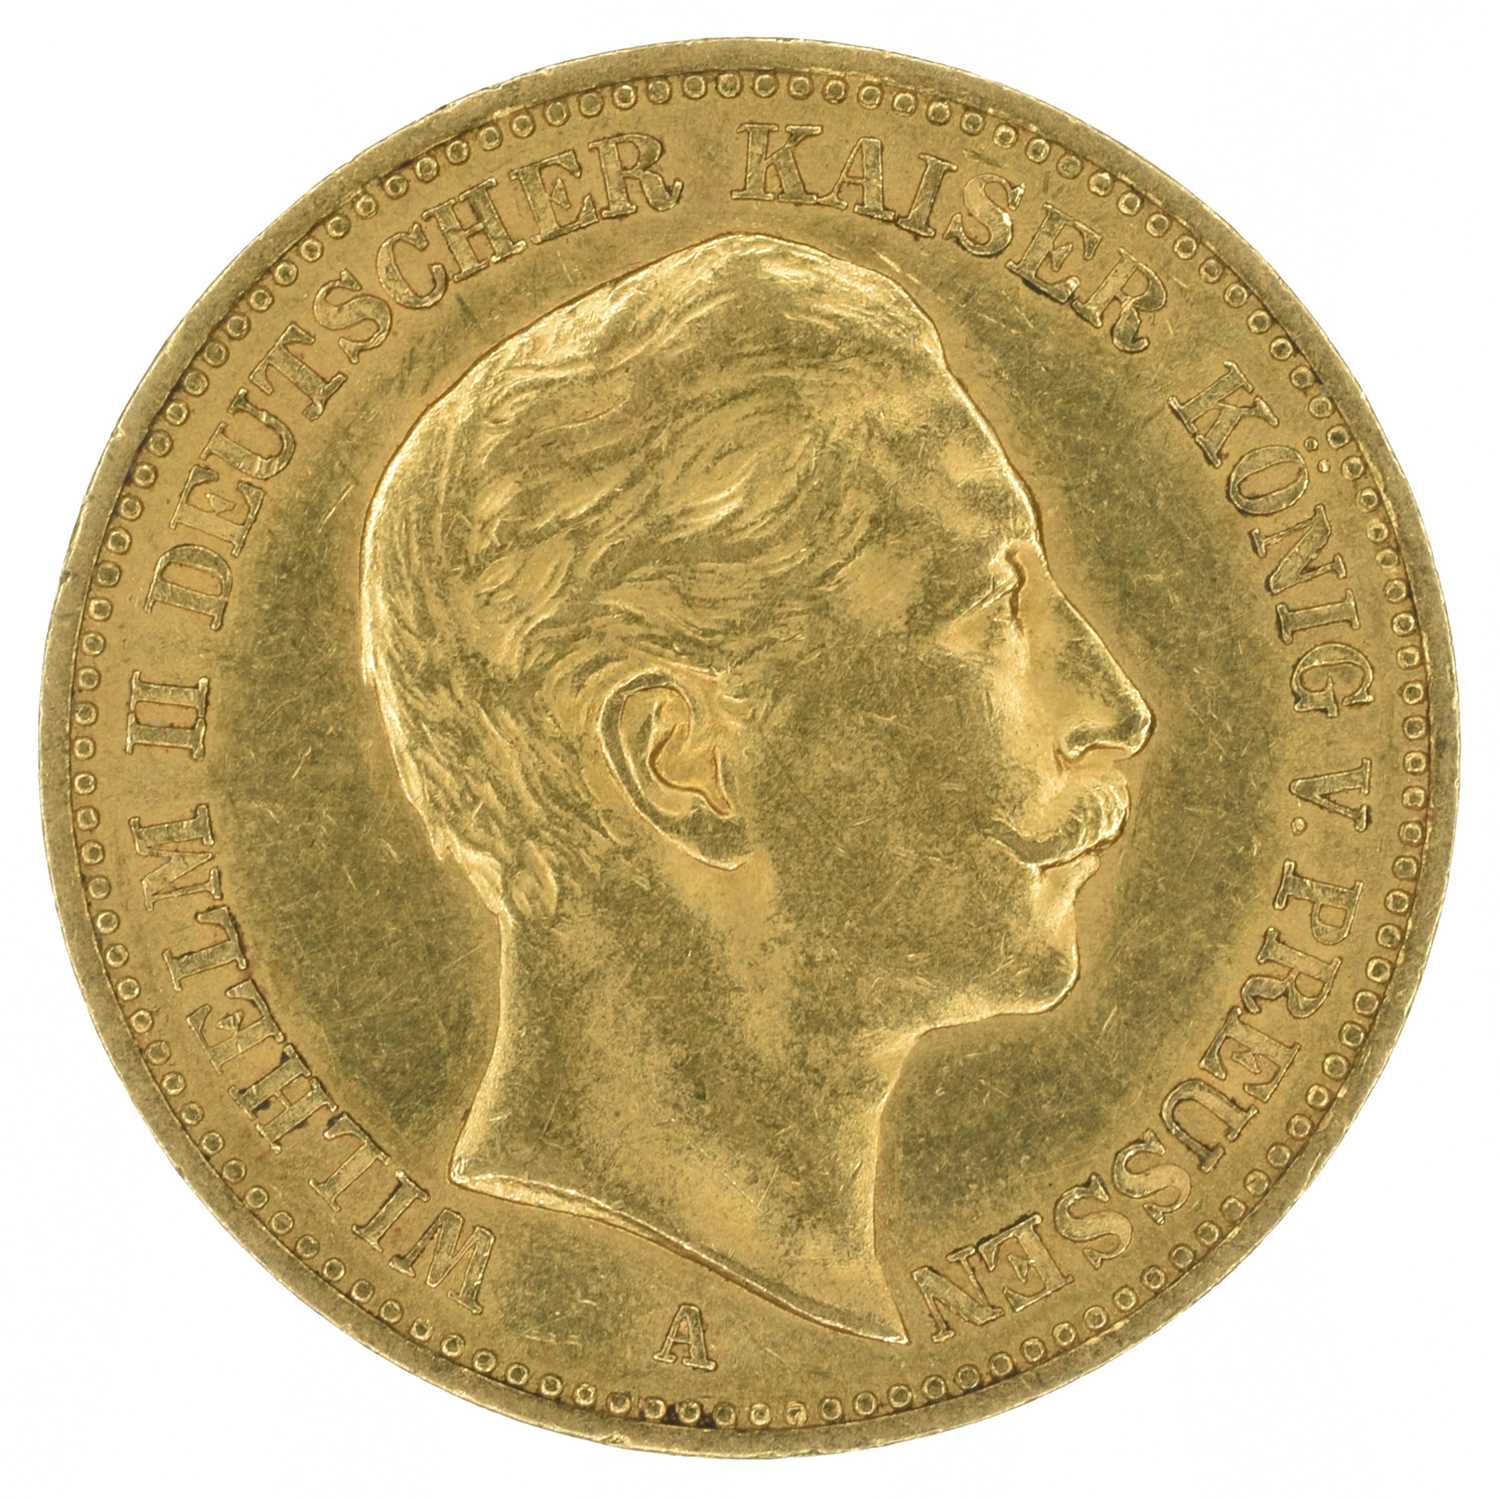 Lot 72 - German States, Prussia, Wilhelm II (1888-1918), 20 (Twenty) Mark, 1894, mm. A, gold, weight 8g, EF.